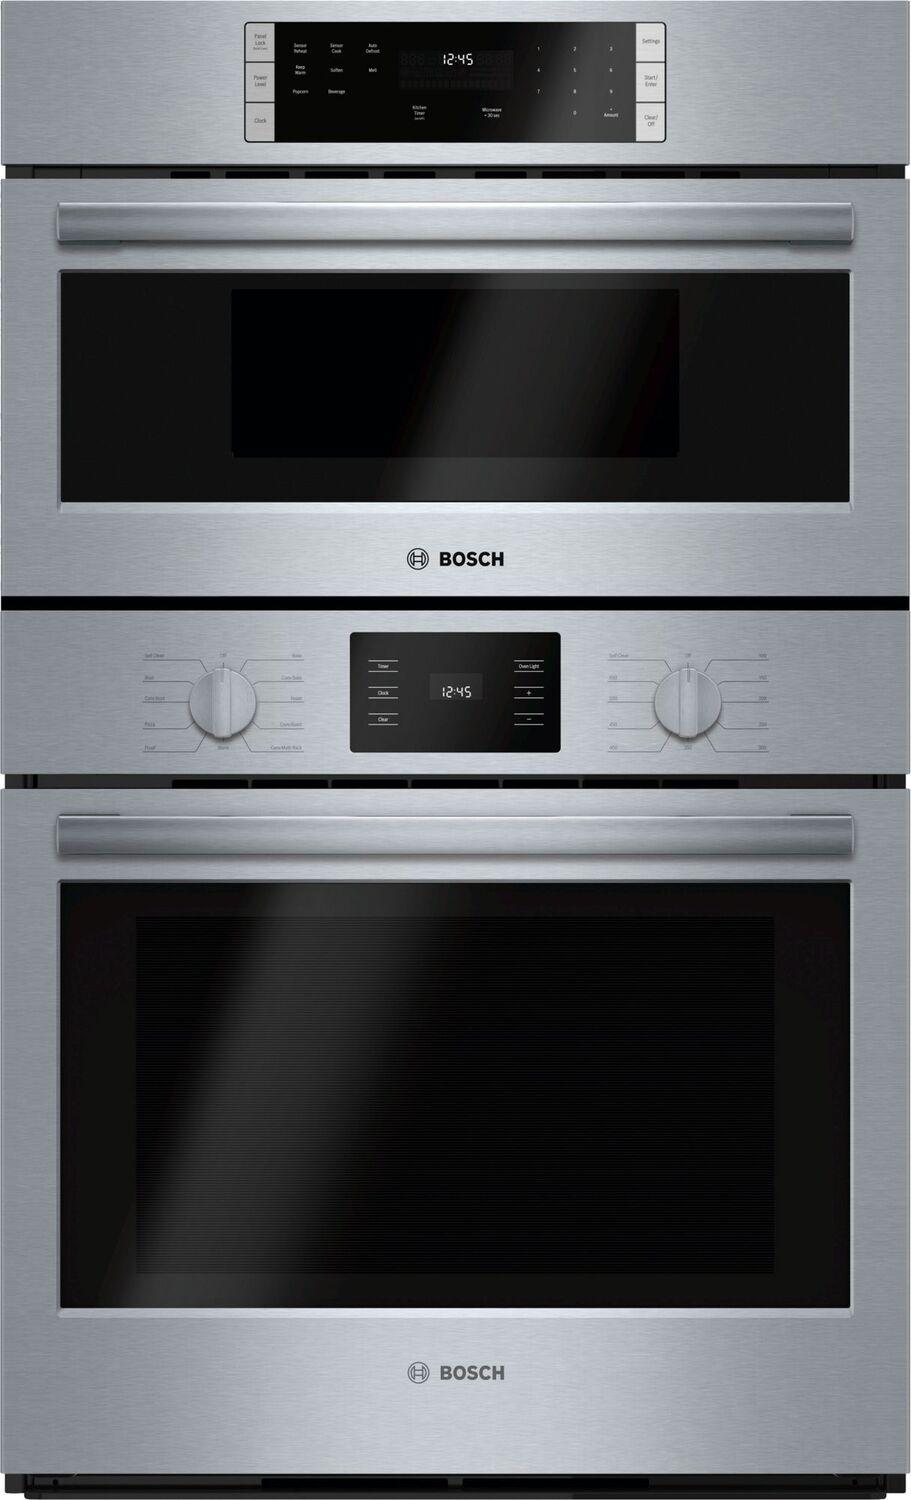 Bosch 500 Series, 30" Combo, Upper: Microwave, Lower: EU Conv, Knob Control